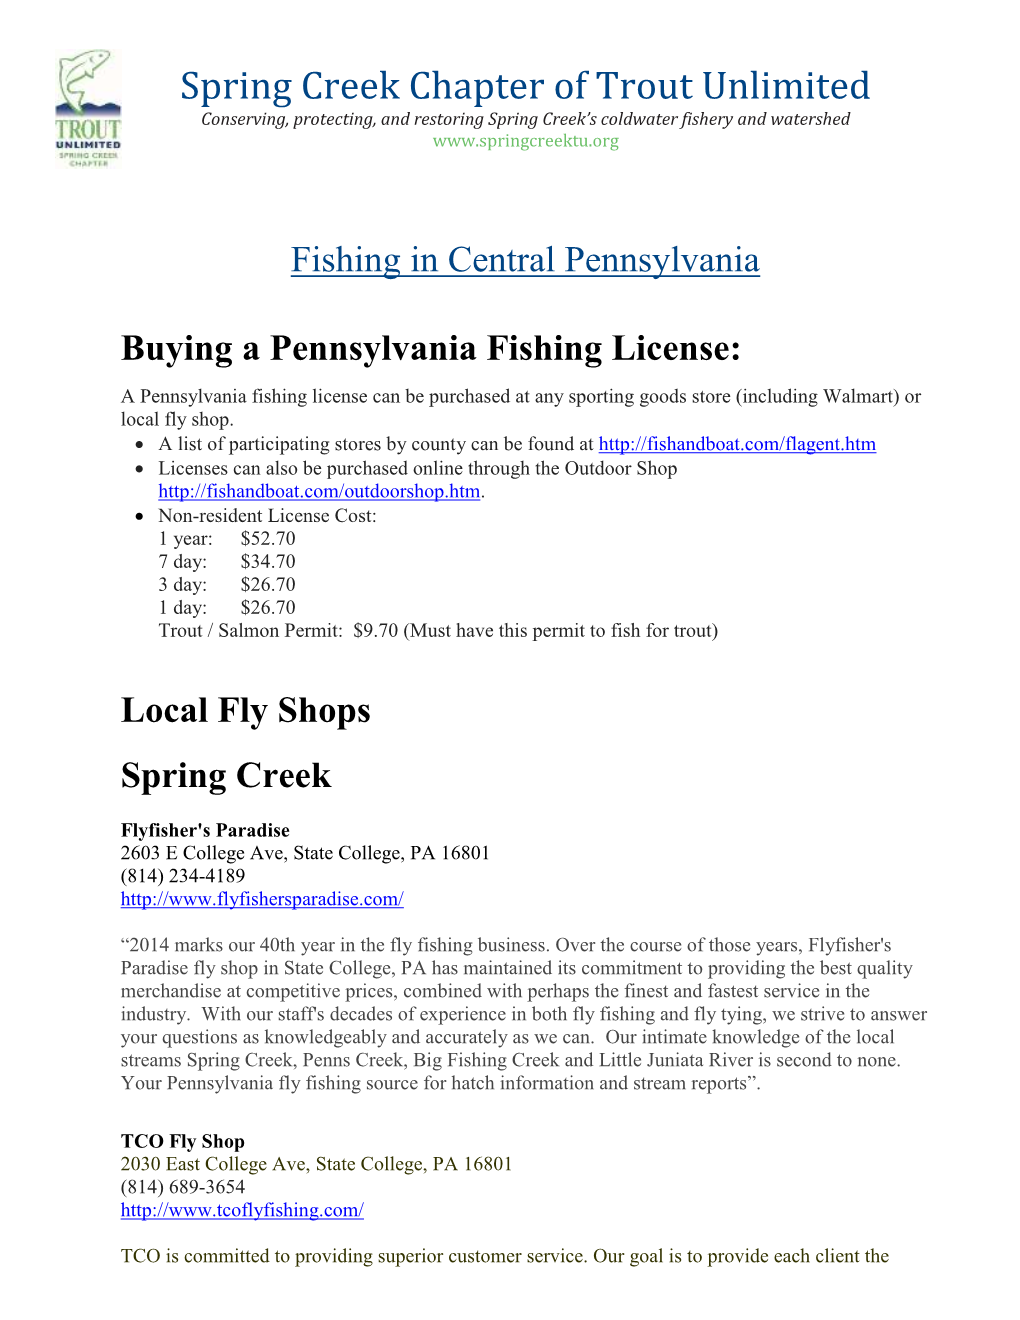 Central Pennsylvania Fishing Information